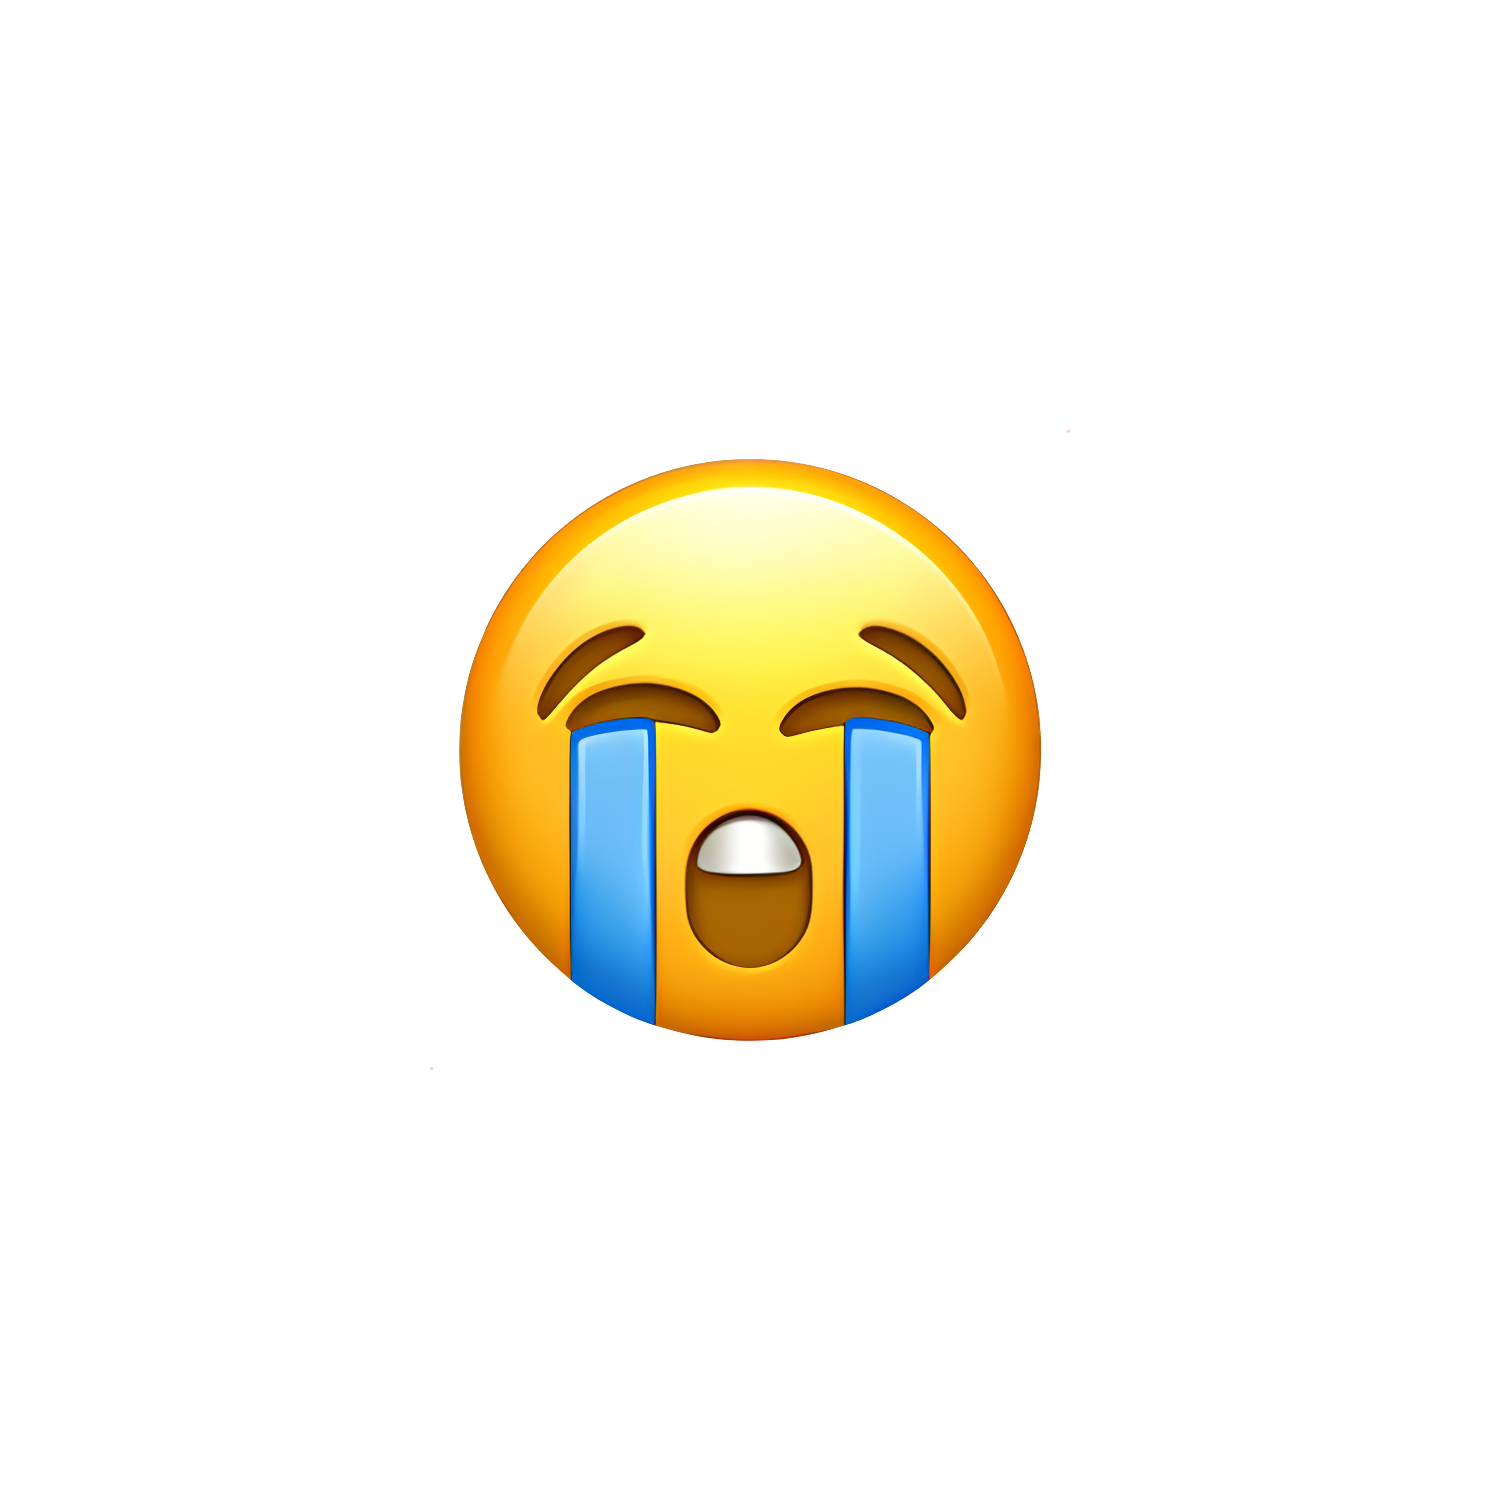 Loudly Crying Face Emoji  Transparent Image